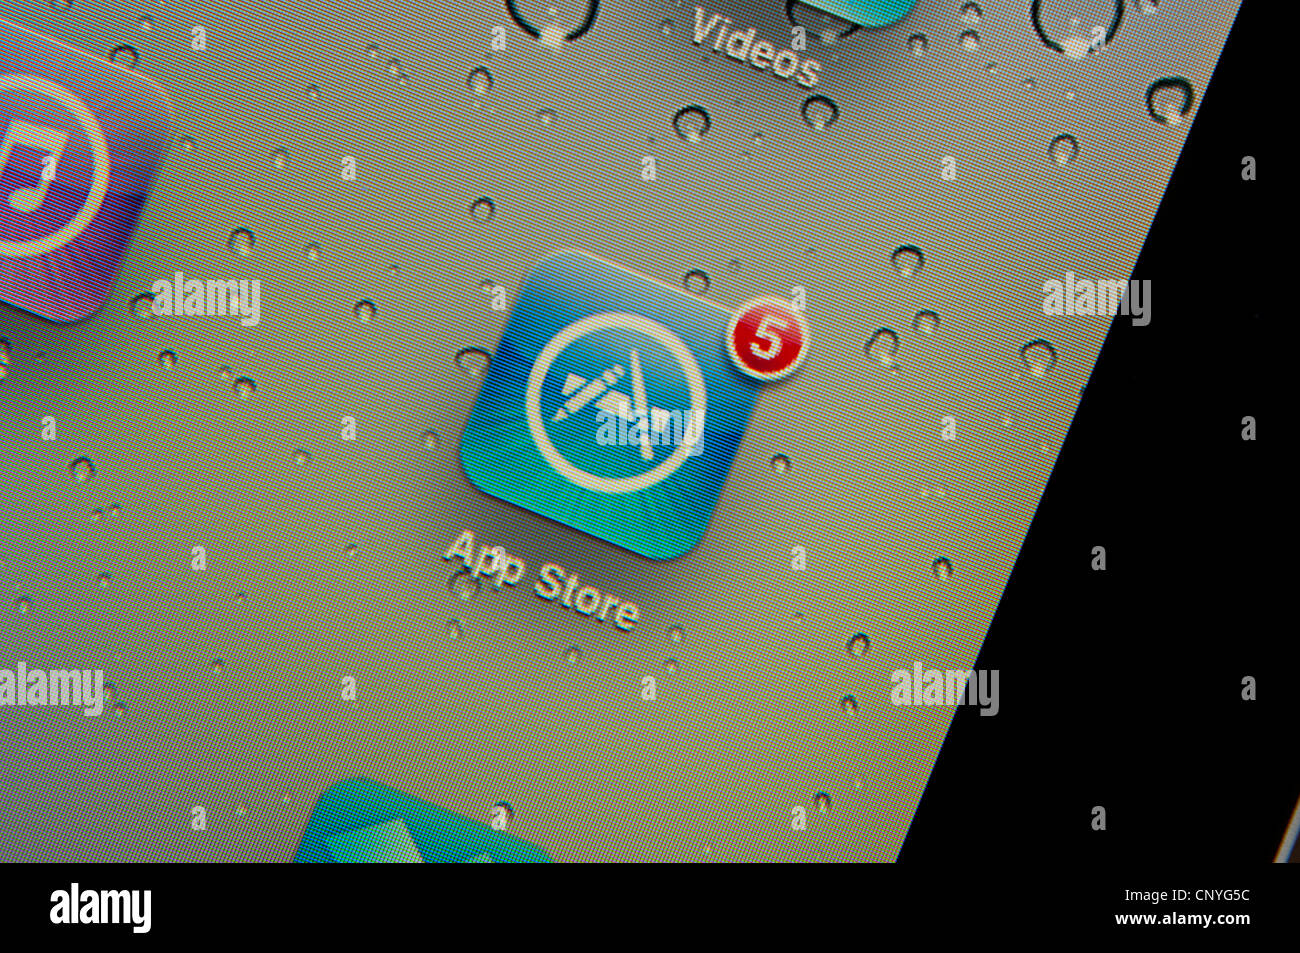 App store icon on Ipad 2 screen. Stock Photo